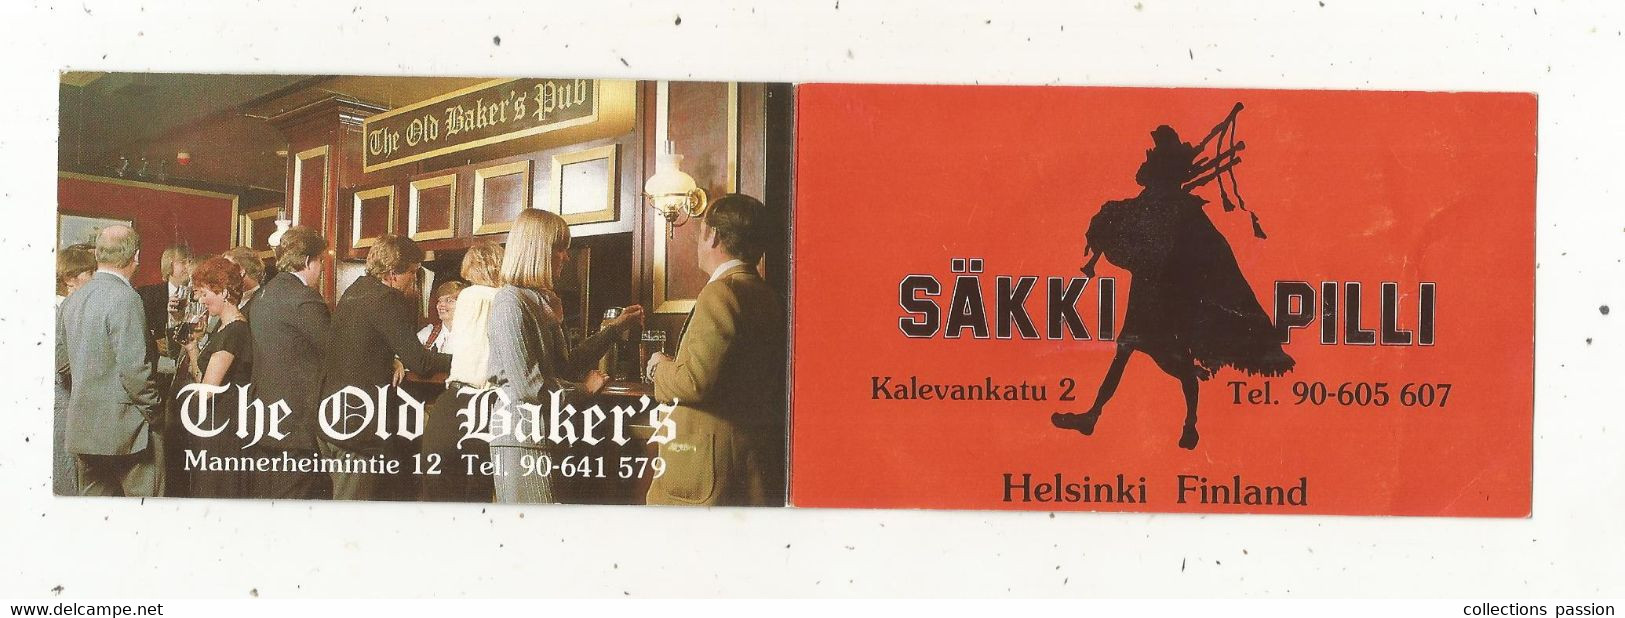 Carte De Visite, FINLAND,  FINLANDE,  HELSINKI,  SÄKKI PILLI , THE OLD BAKER'S, Pubs , Restaurants...2 Scans - Tarjetas De Visita